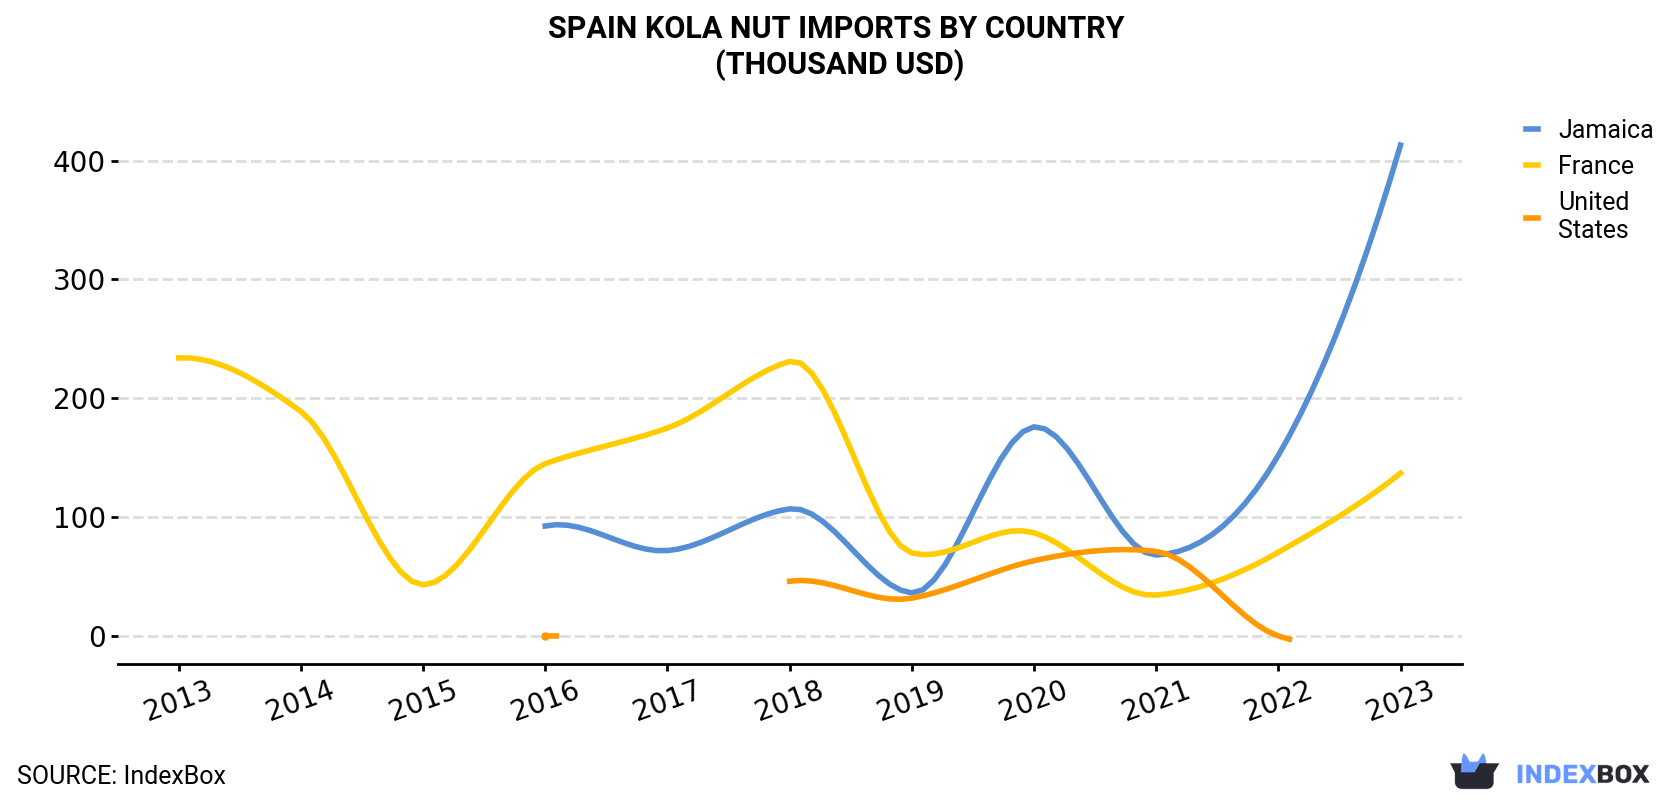 Spain Kola Nut Imports By Country (Thousand USD)